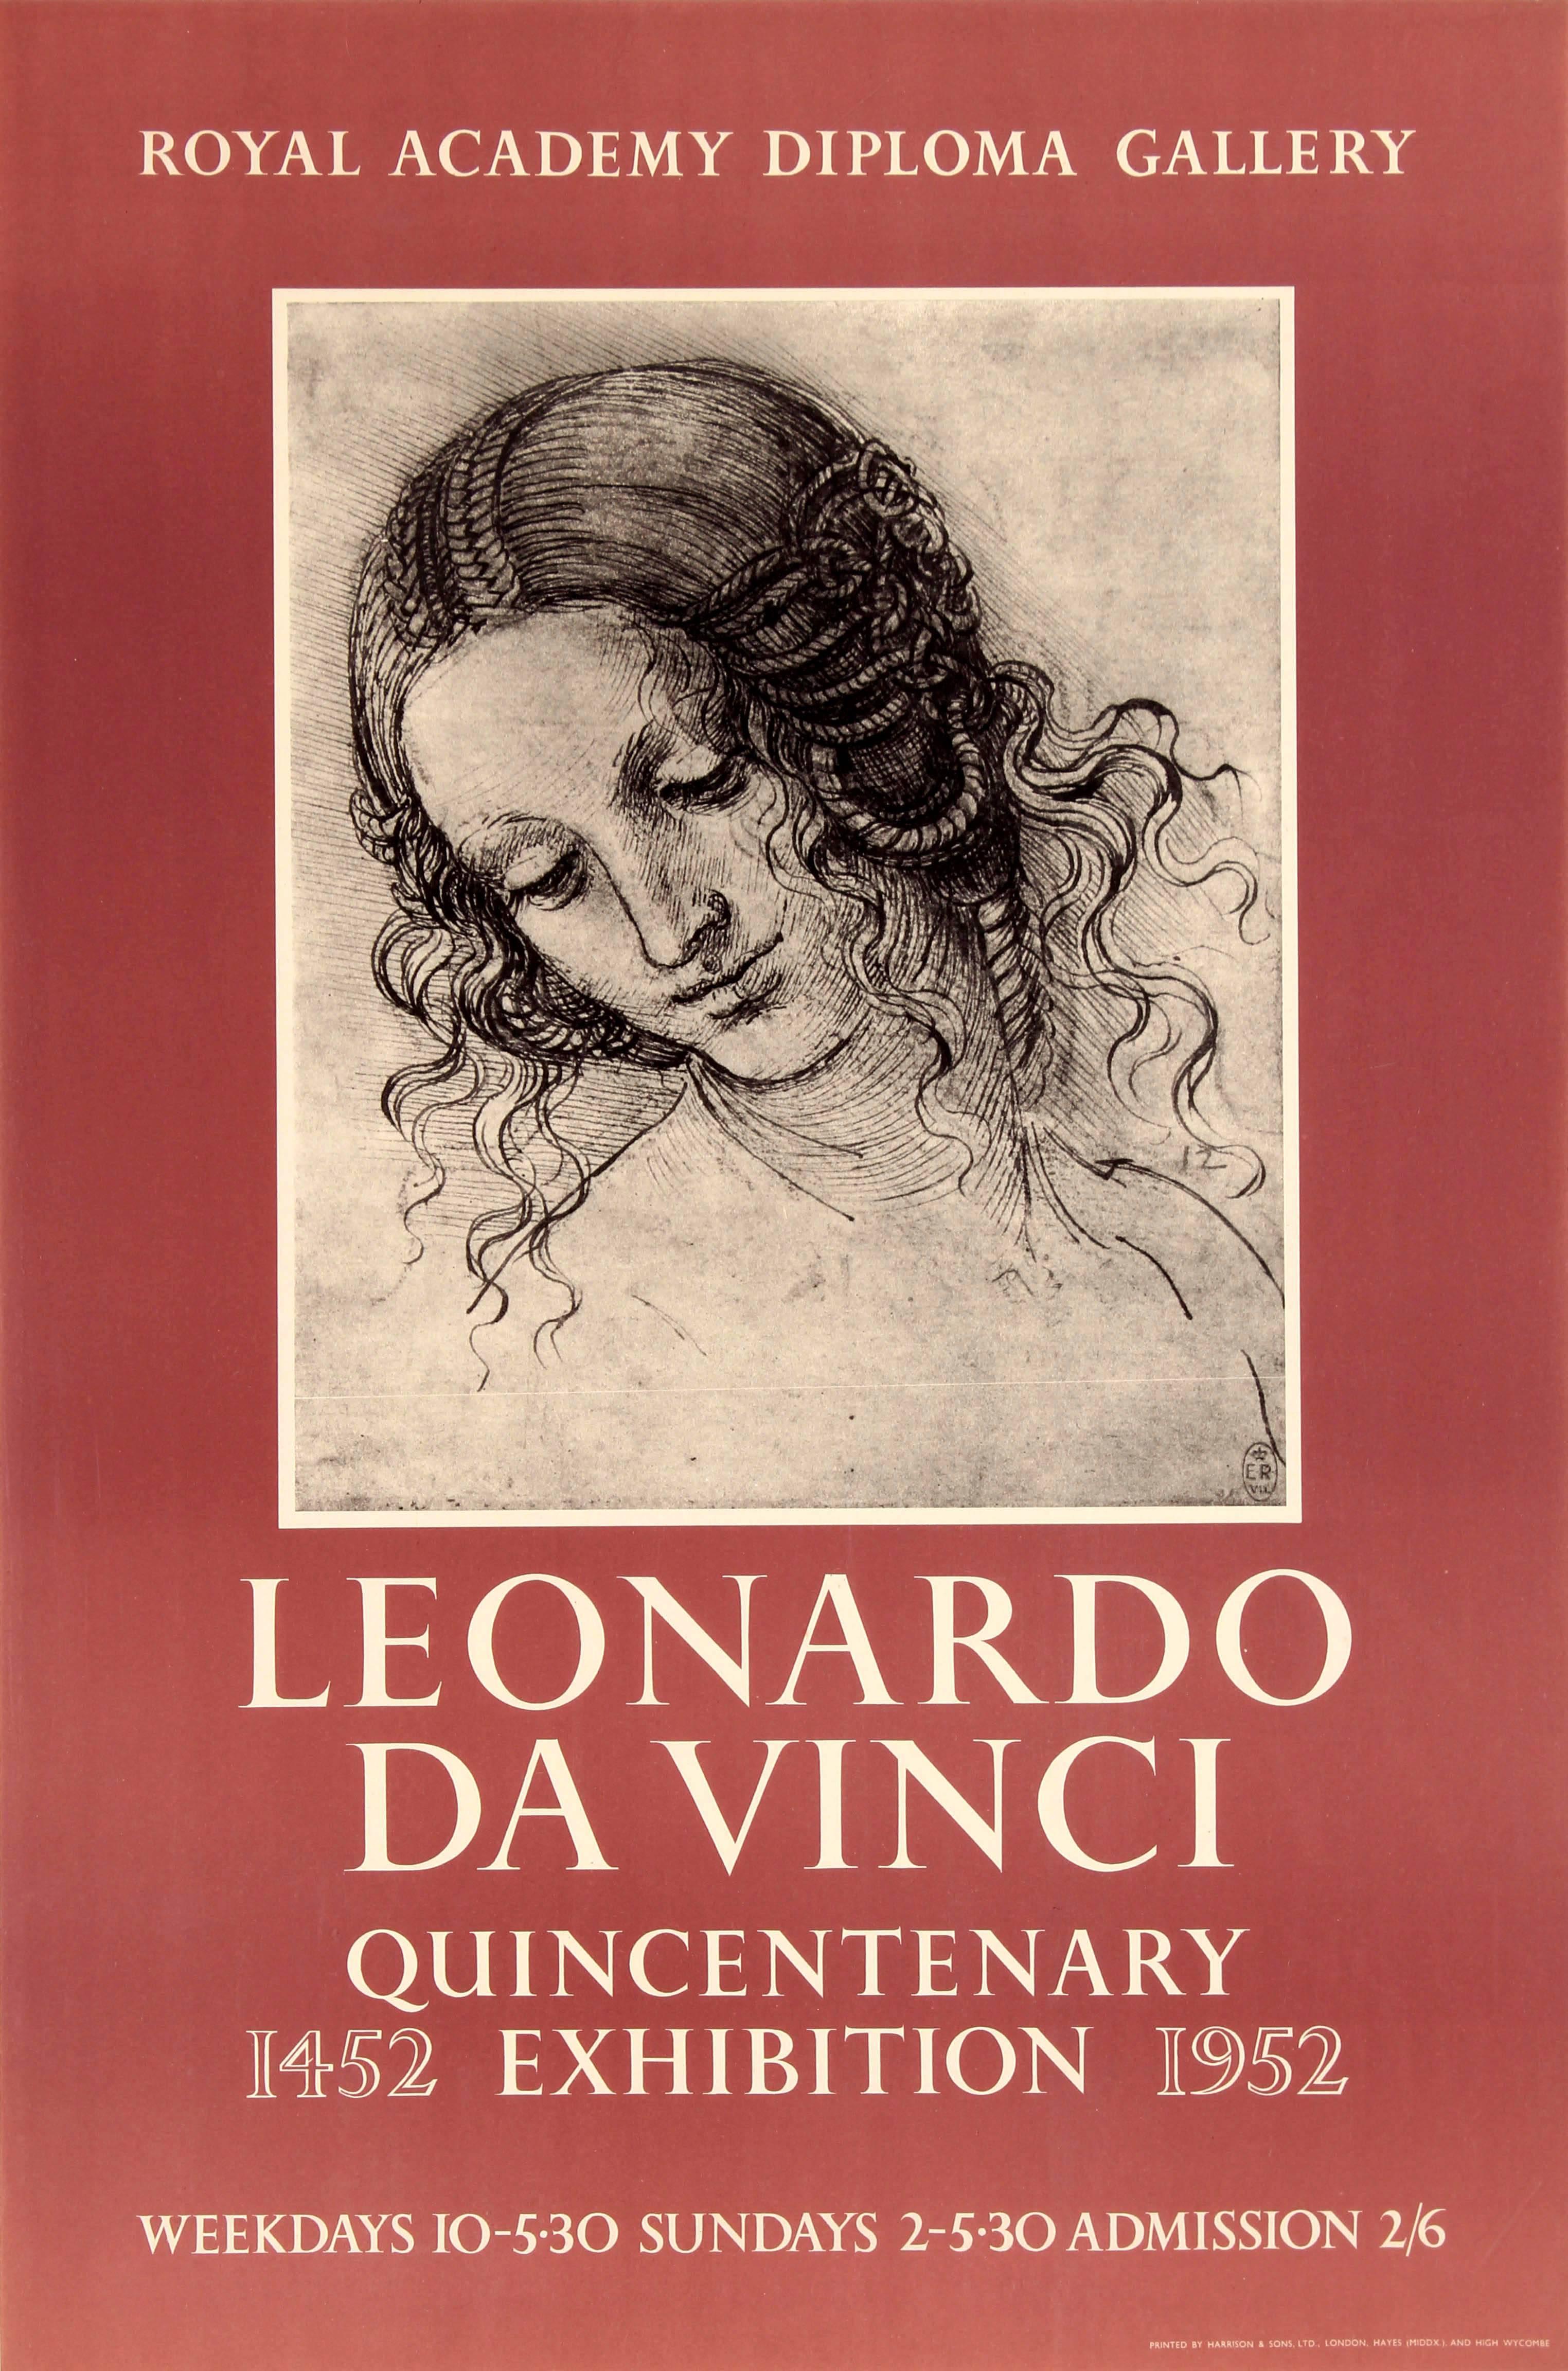 Theodore Ramos Print - Original Vintage Royal Academy Poster For The 1952 Leonardo Da Vinci Exhibition